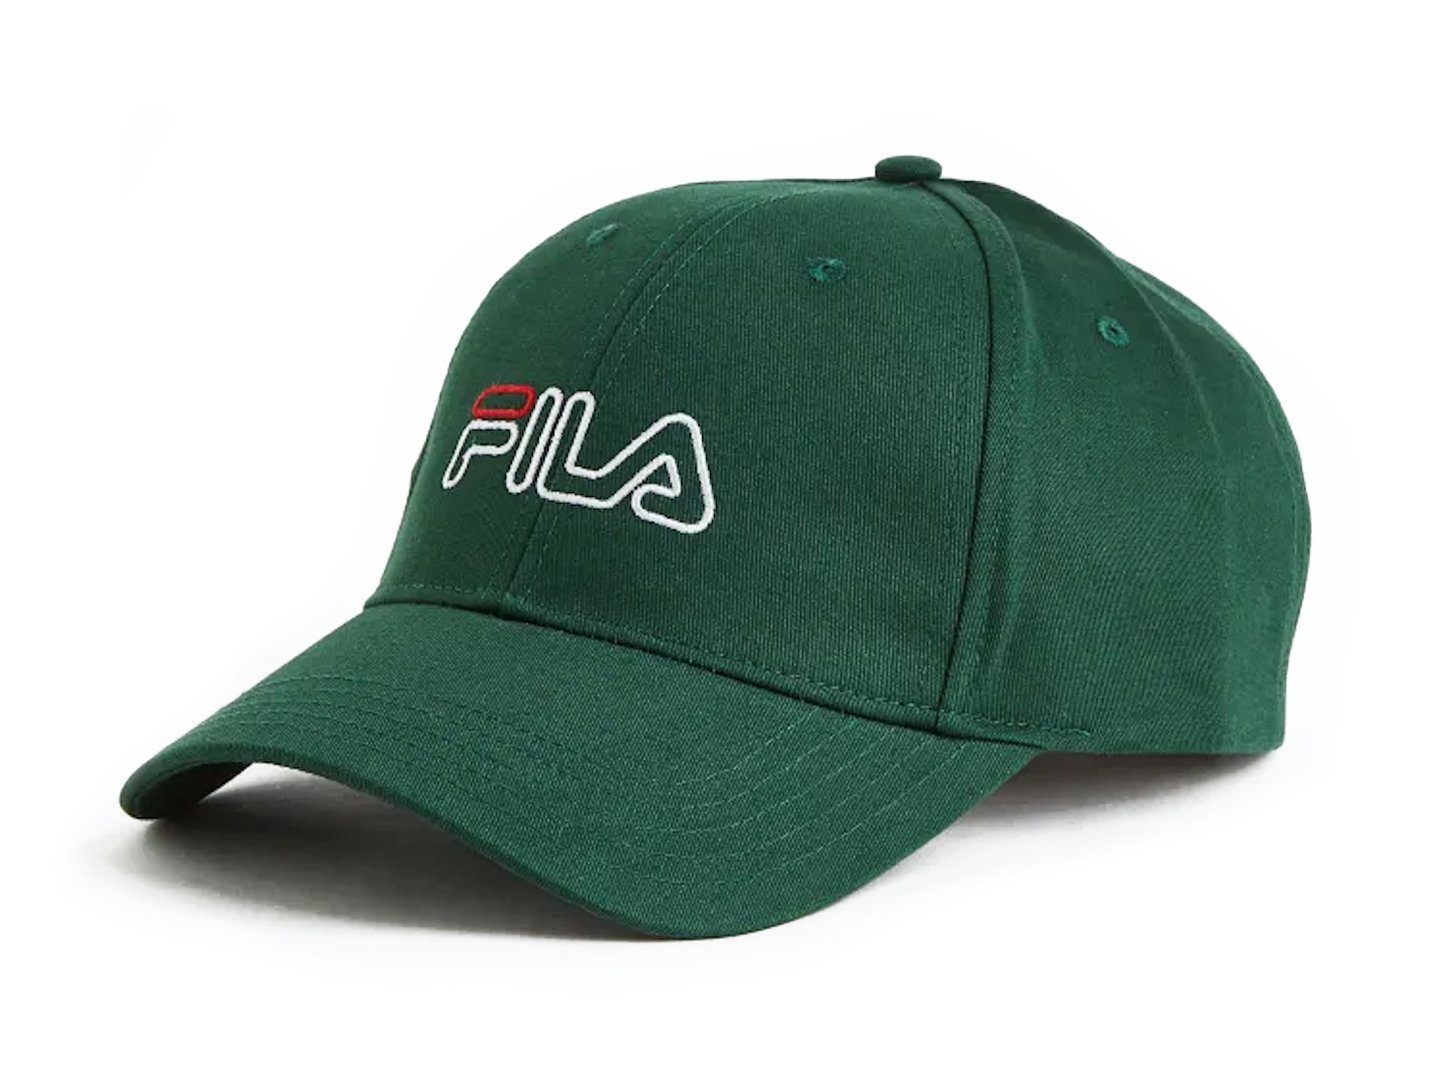 Baseball Kappe Mütze Grün Fila - Unisex mit Logo Cap SUITA Schnalle